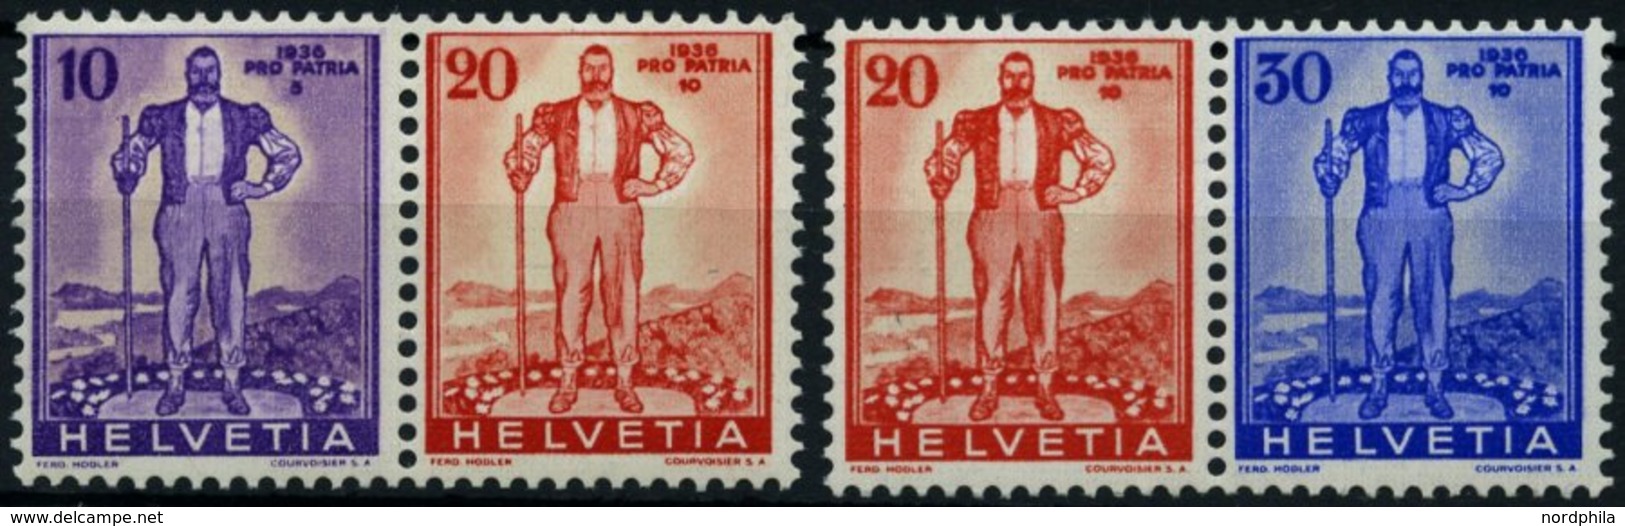 SCHWEIZ BUNDESPOST A294/5,A 295/6 **, 1936, Pro Patria, 2 Prachtpaare, Mi. 97.- - 1843-1852 Poste Federali E Cantonali